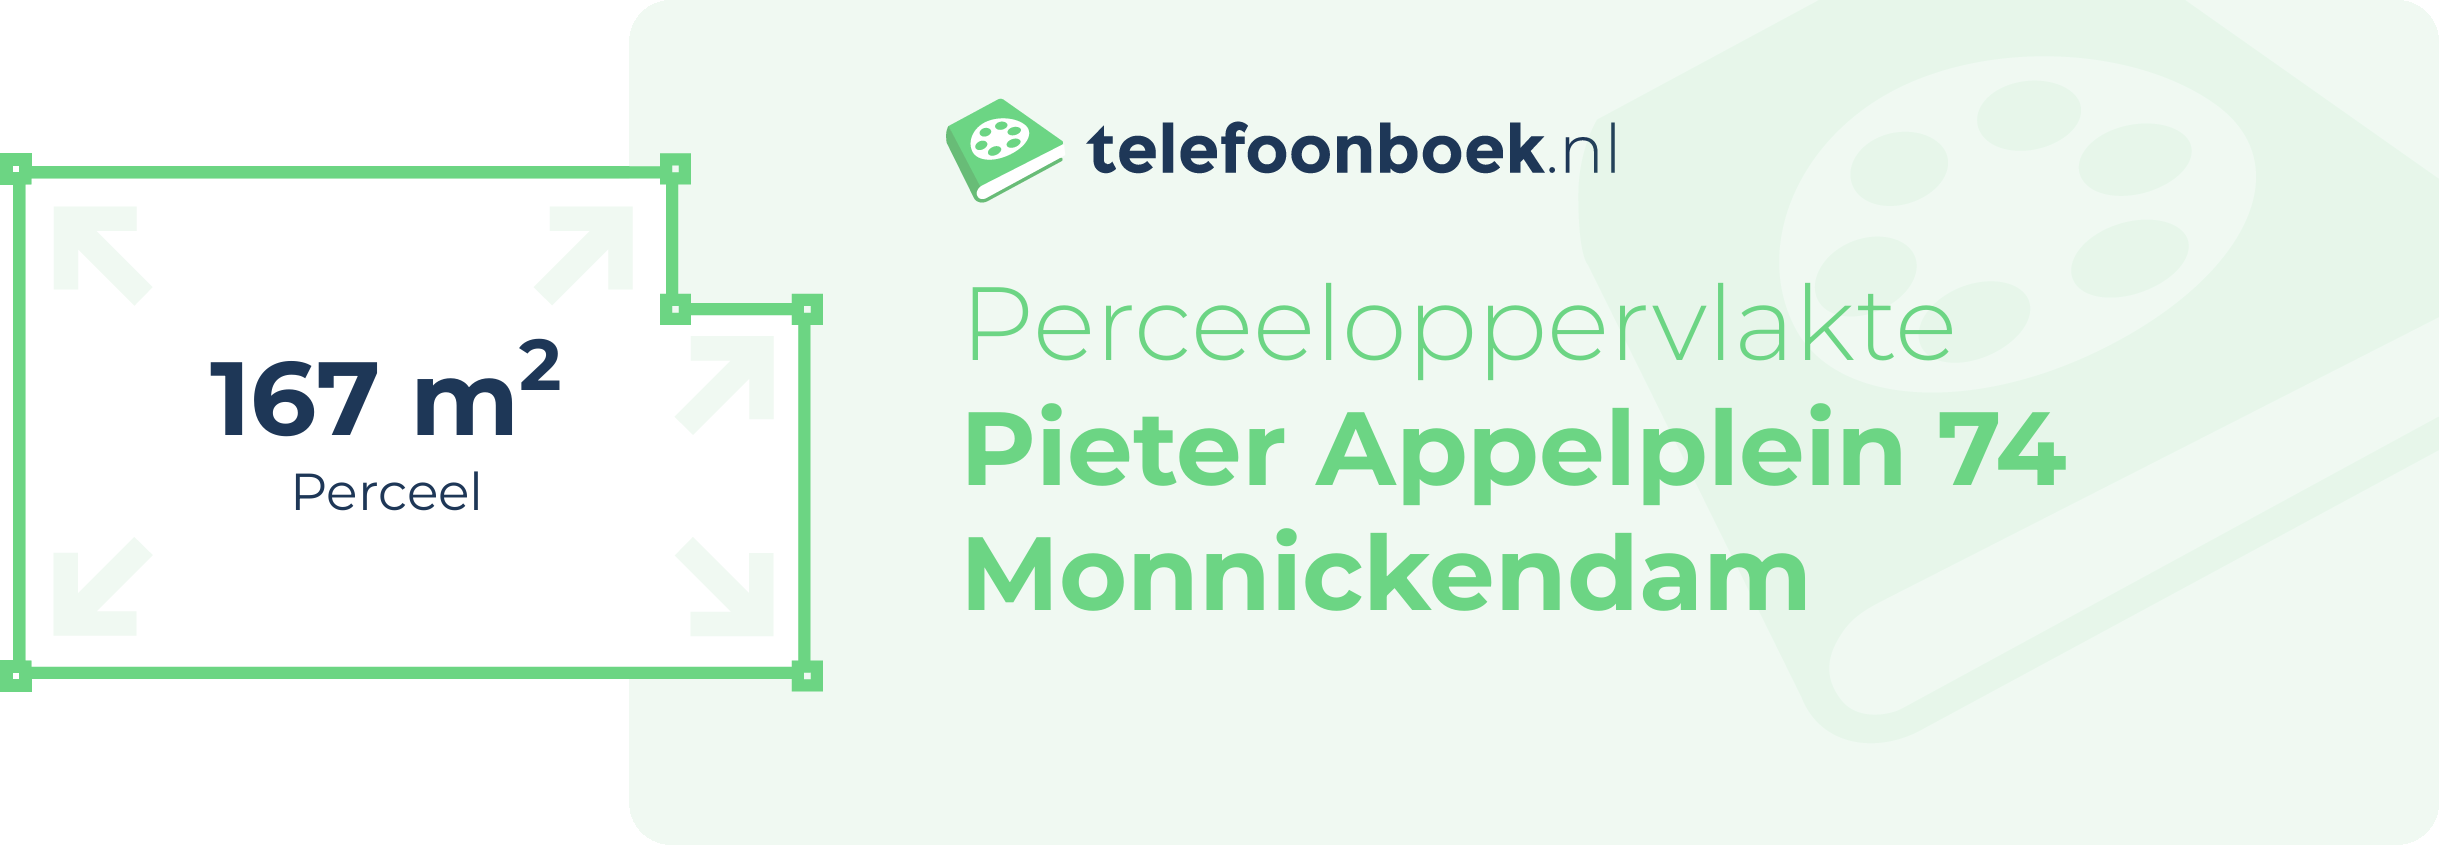 Perceeloppervlakte Pieter Appelplein 74 Monnickendam